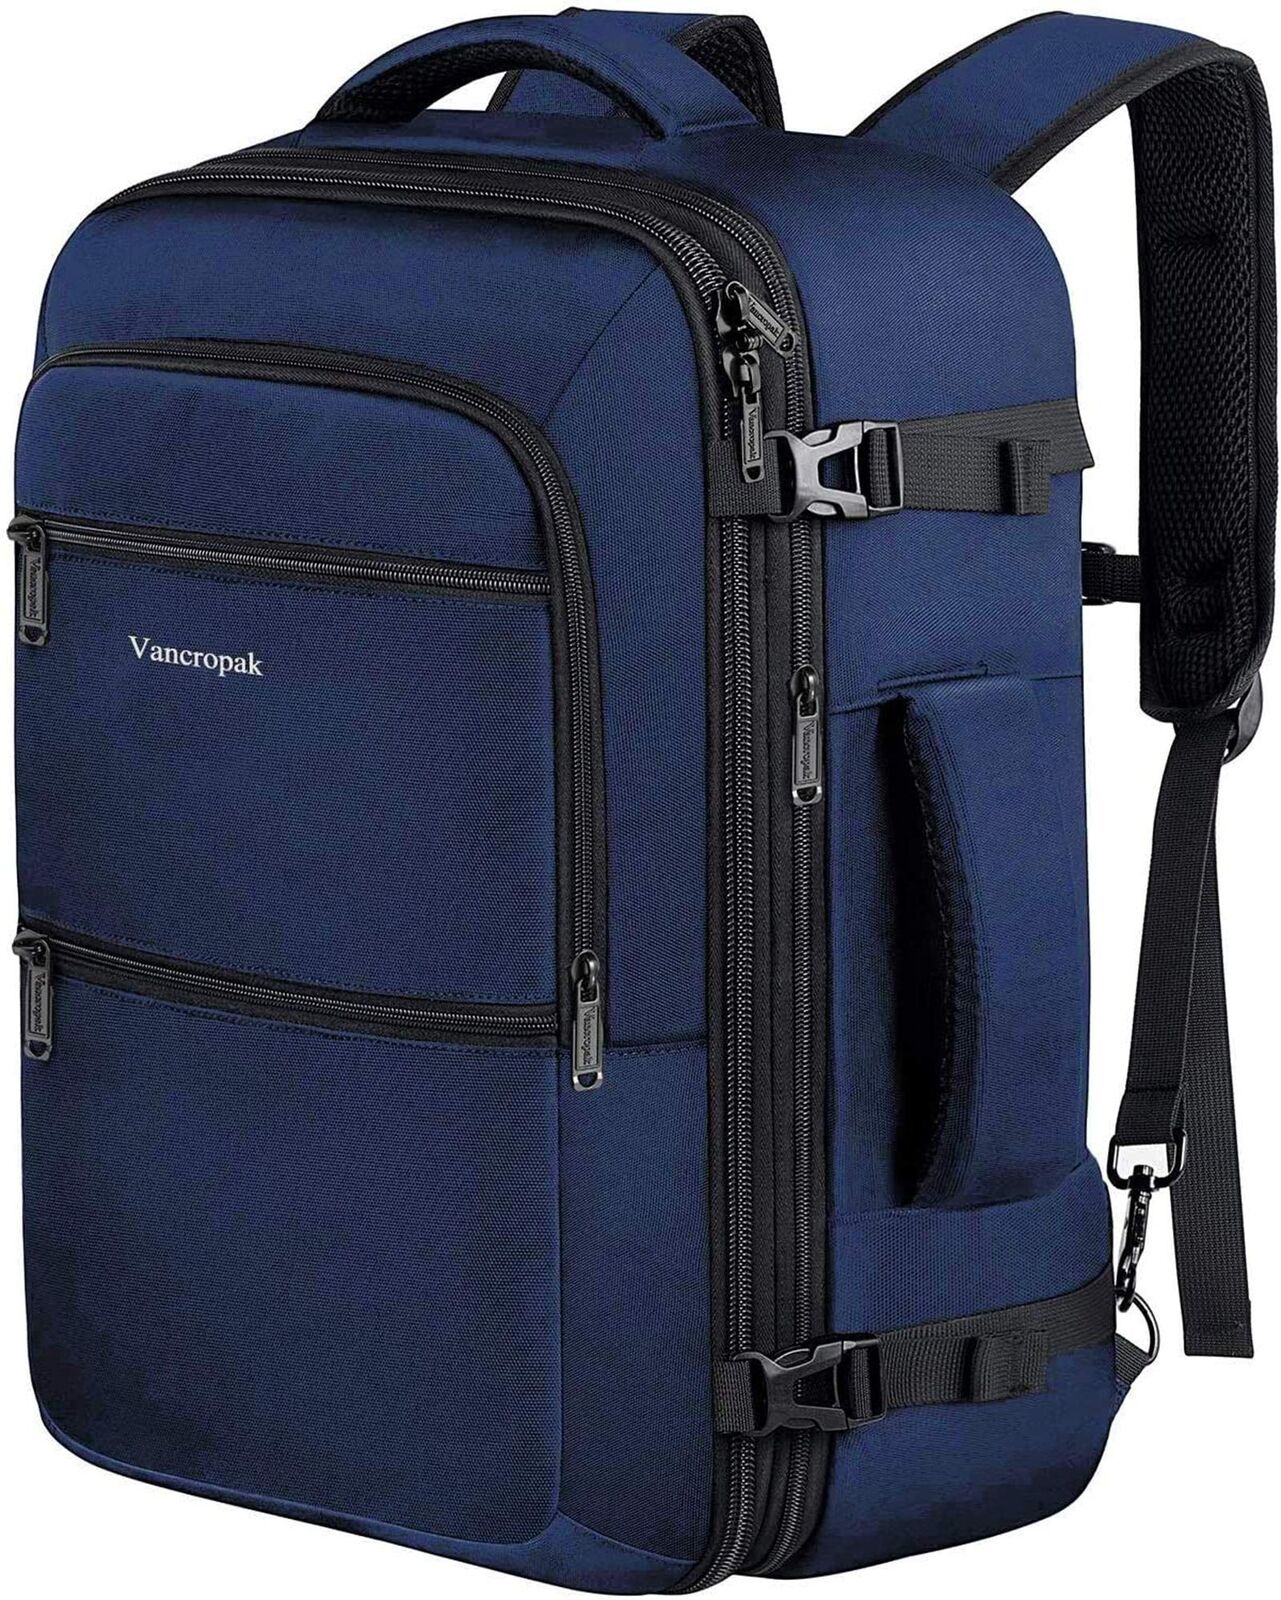 Vancropak Carry On Backpack Expandable Large Travel Backpack for Men/Women 40...